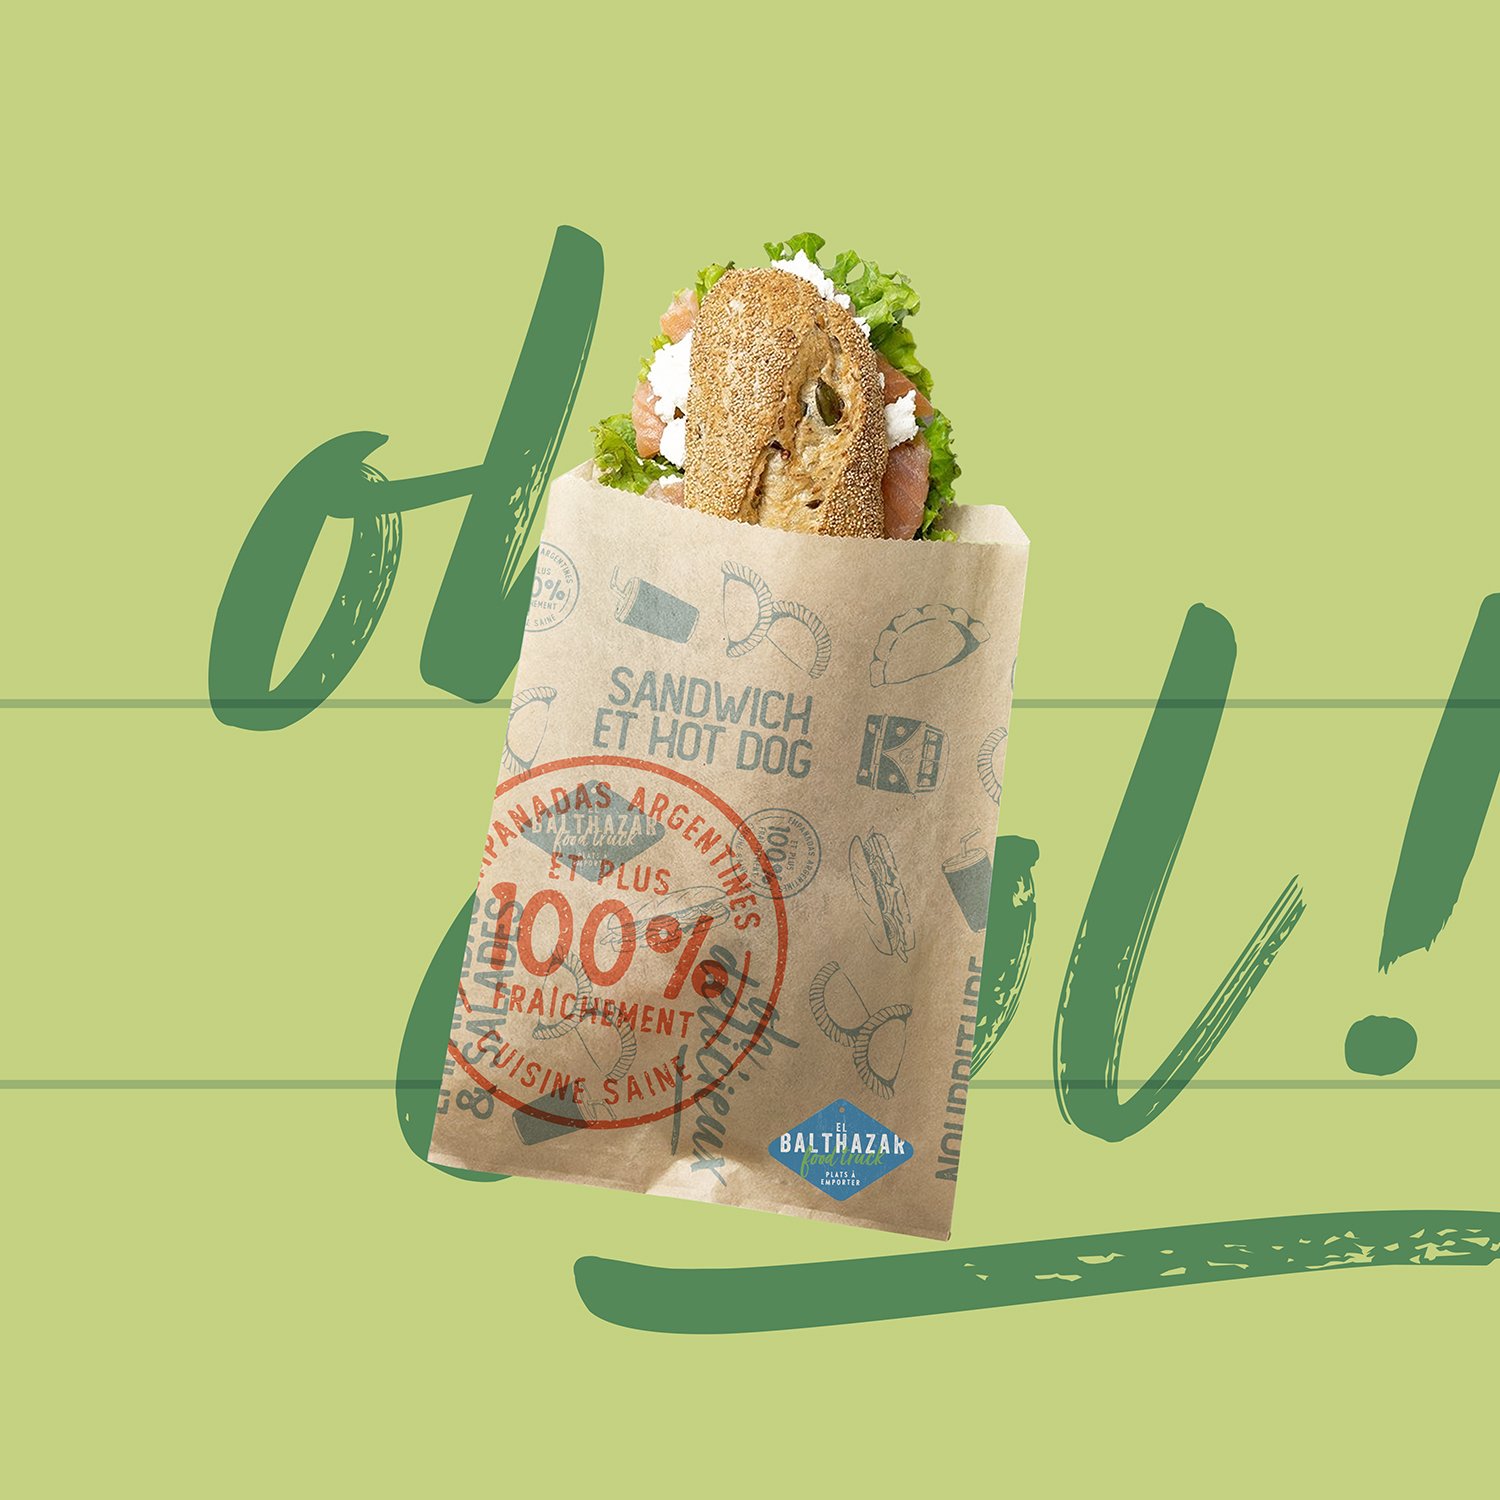 El_balthazar_packaging_sandwich.jpg